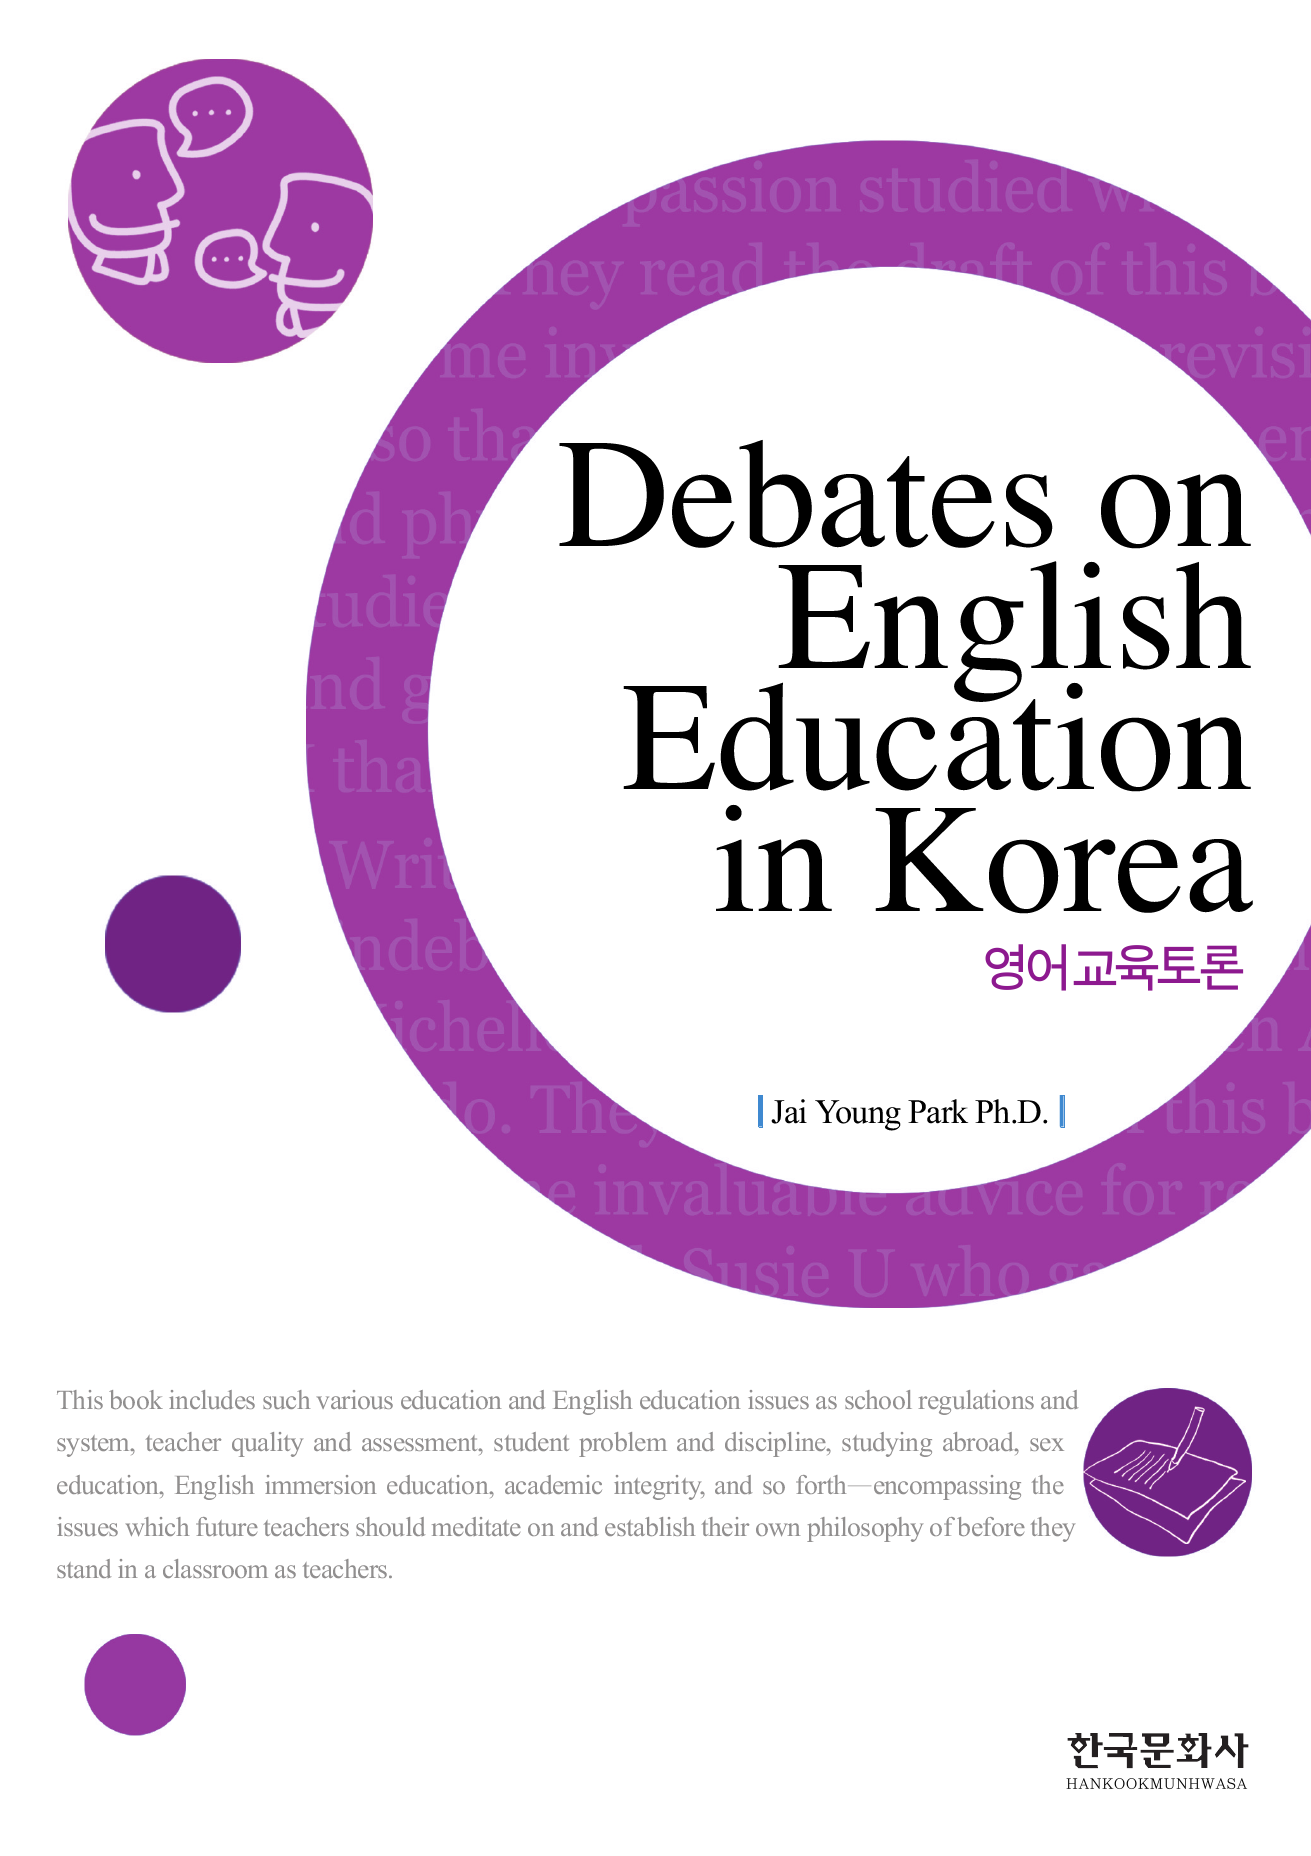 DEBATES ON ENGLISH EDUCATION IN KOREA